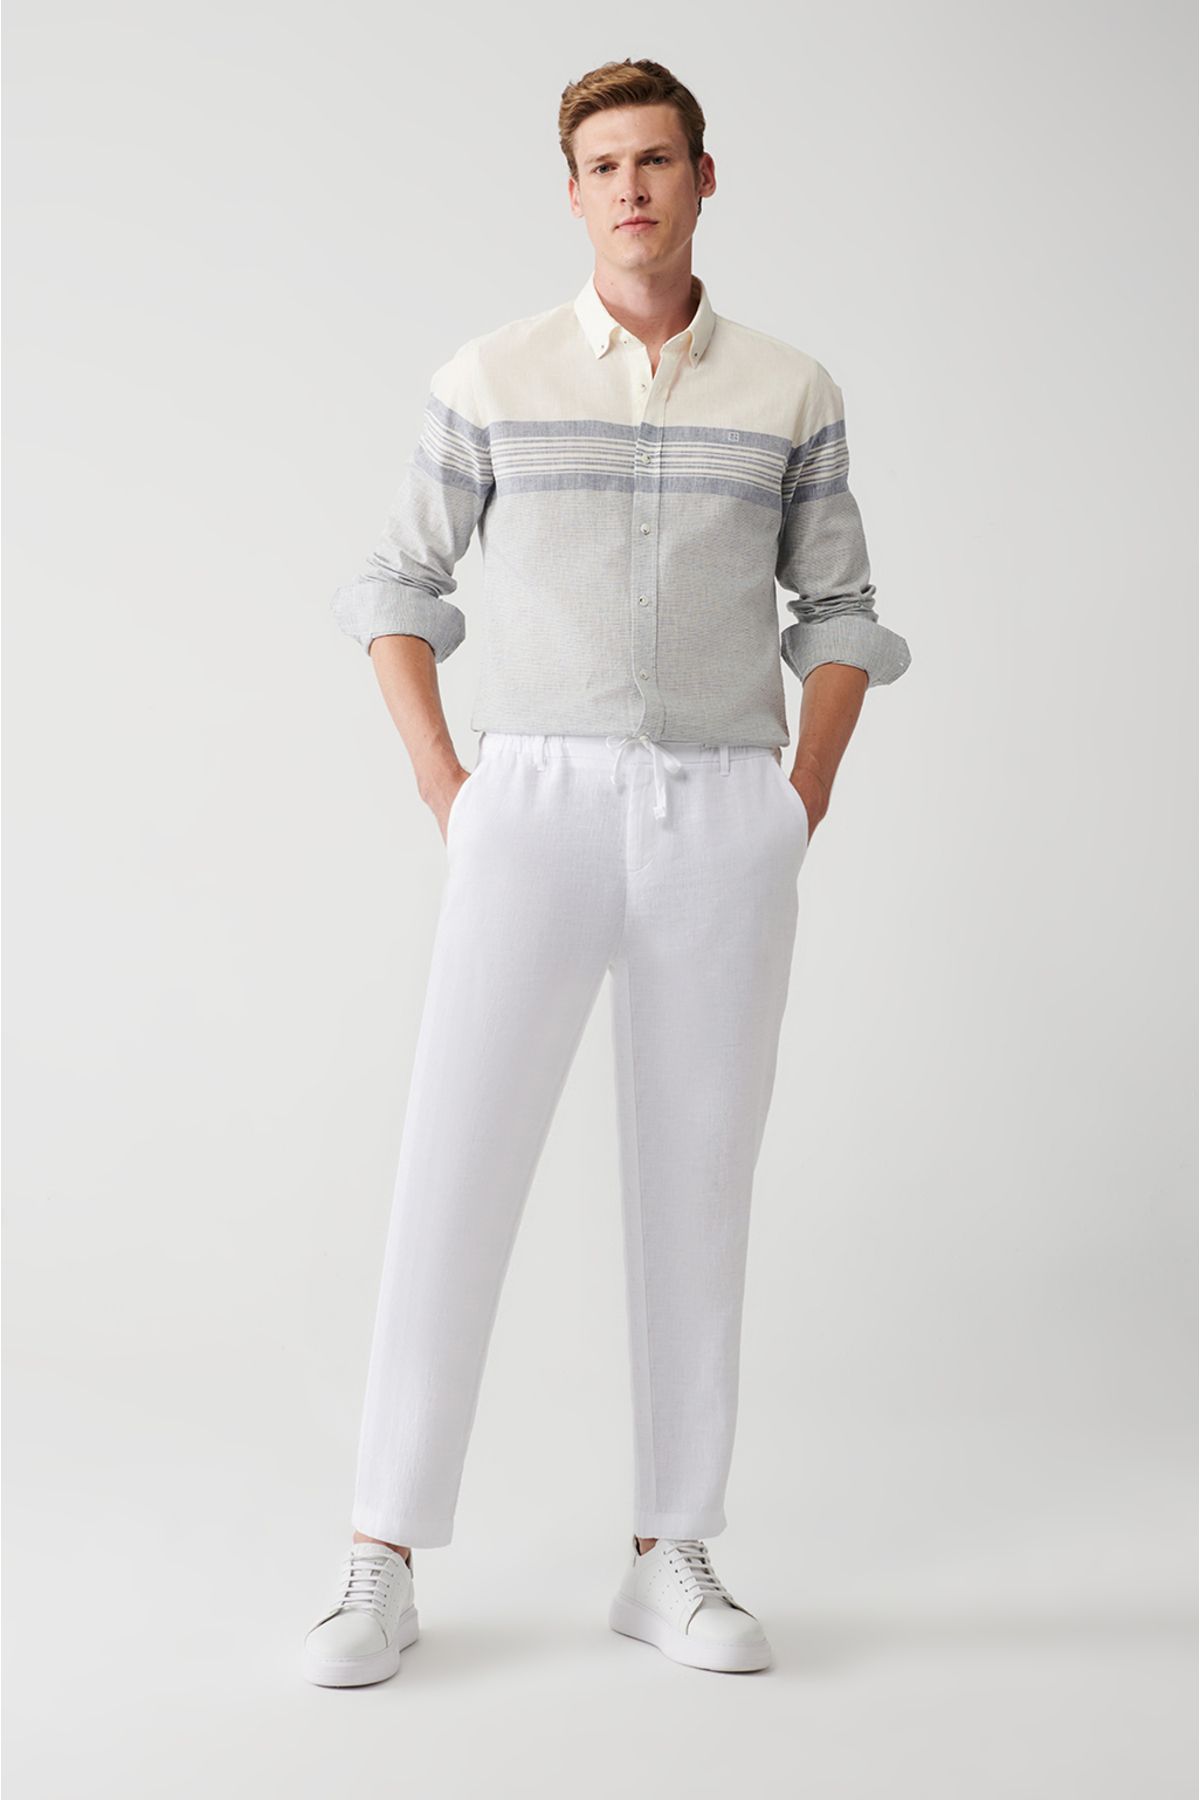 Avva Erkek Kırık Beyaz %100 Keten Yandan Cepli Relaxed Fit Rahat Kesim Pantolon A31y3041